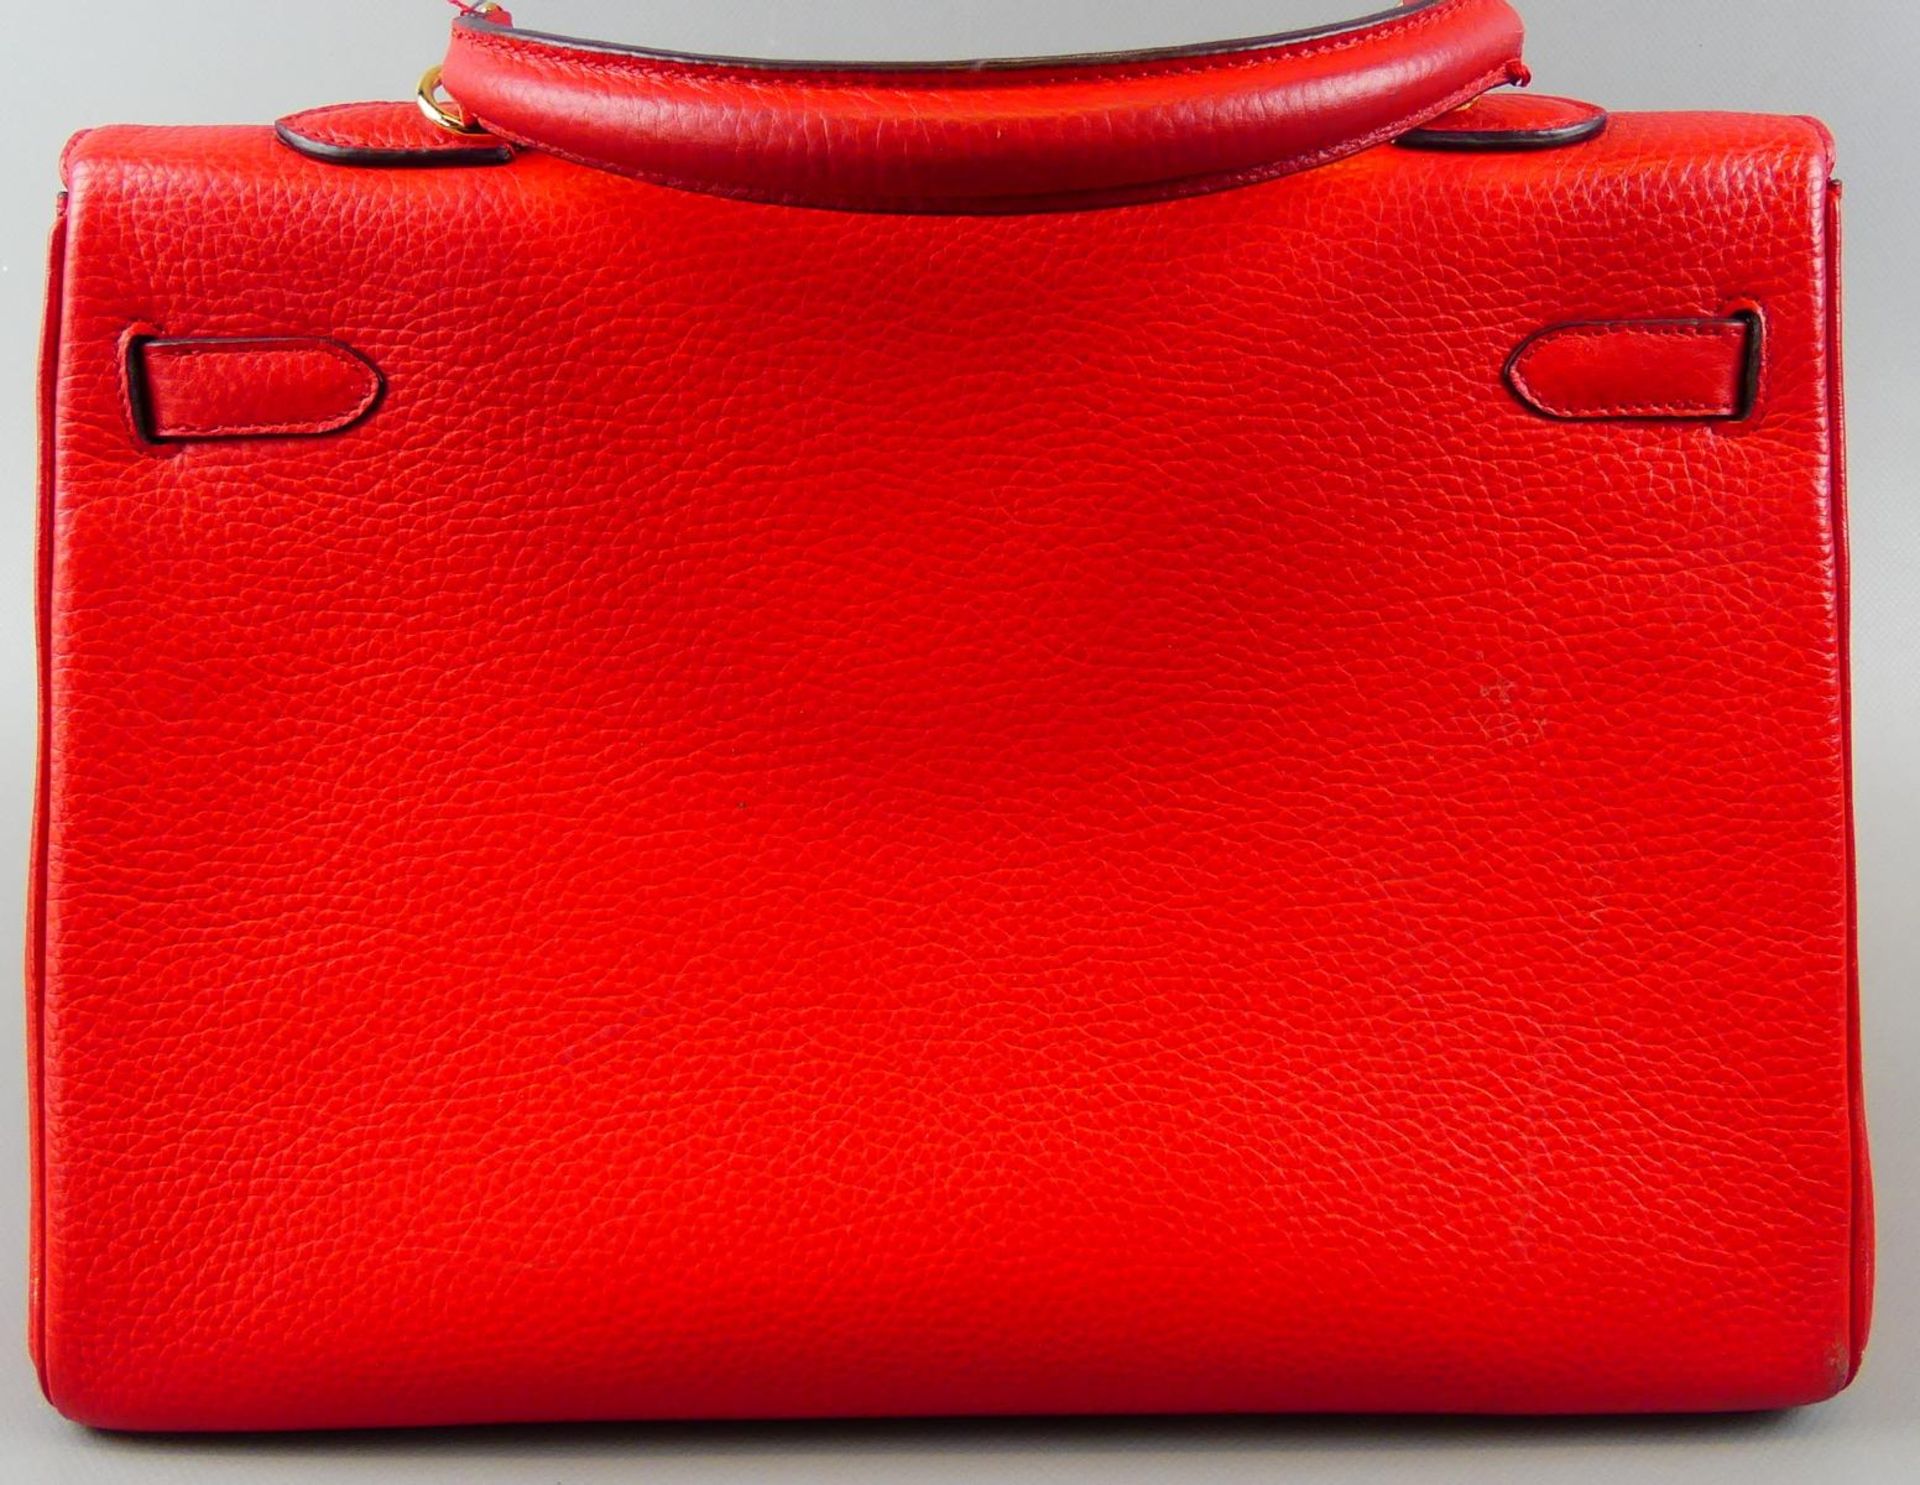 HERMÈS Handtasche "KELLY BAG 35", Koll. 2012, Modell Retourné, - Bild 4 aus 10